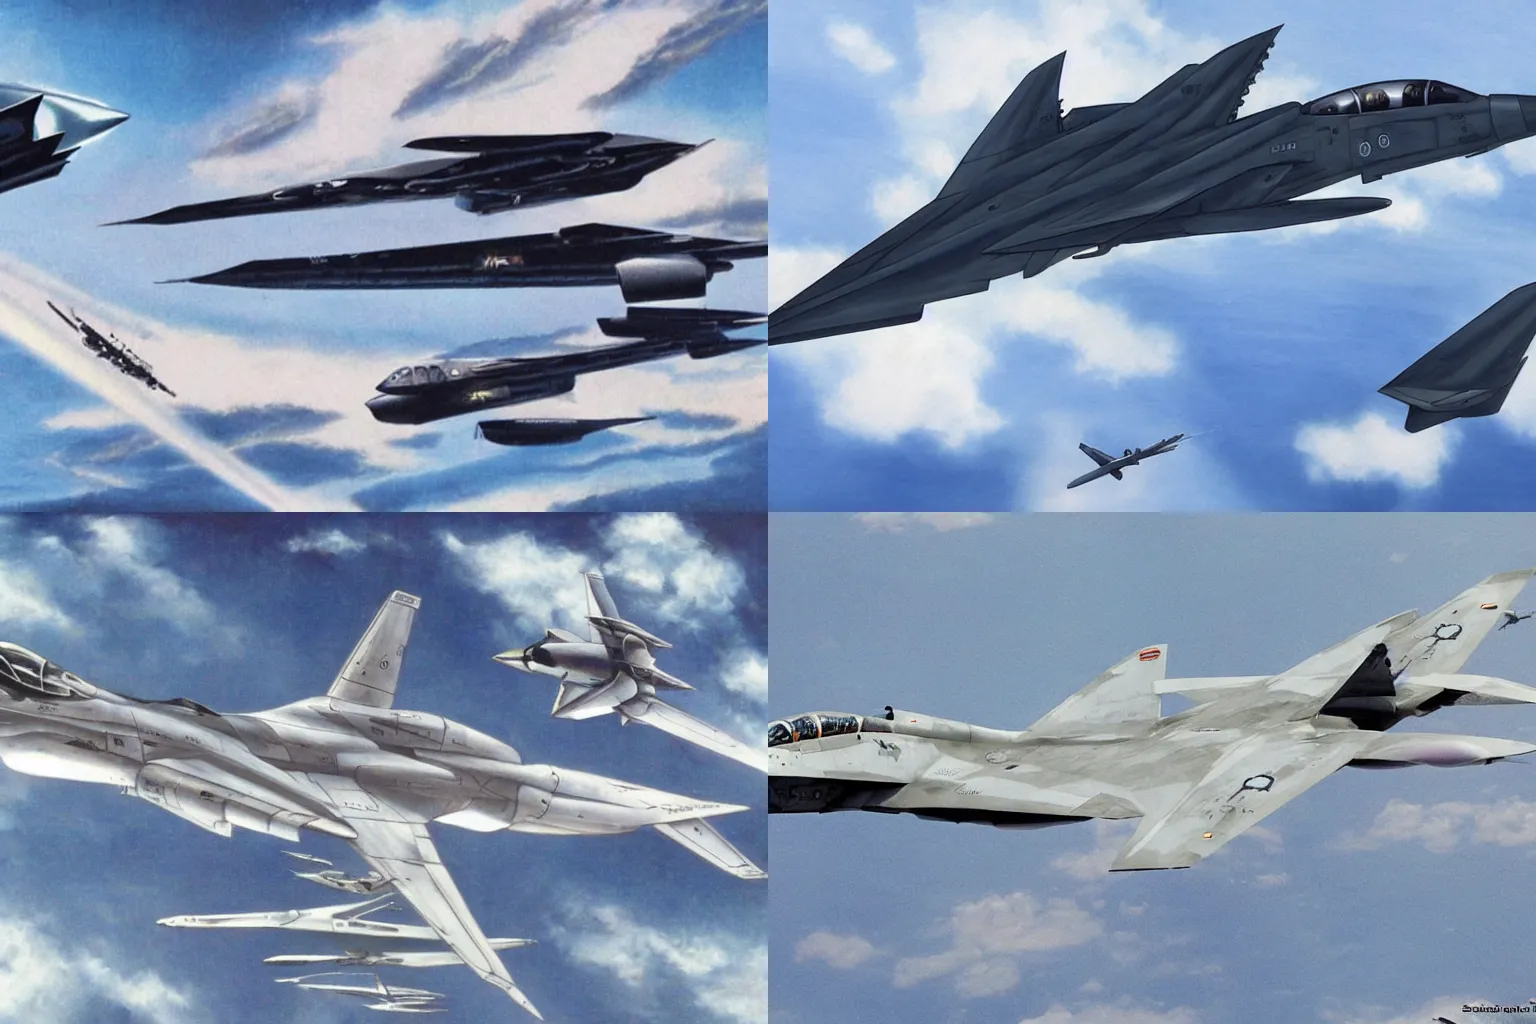 Prompt: iconic fighter jet plane by shoji kawamori, top secret space plane, tomcat raptor hornet falcon, style of john kenn mortensen